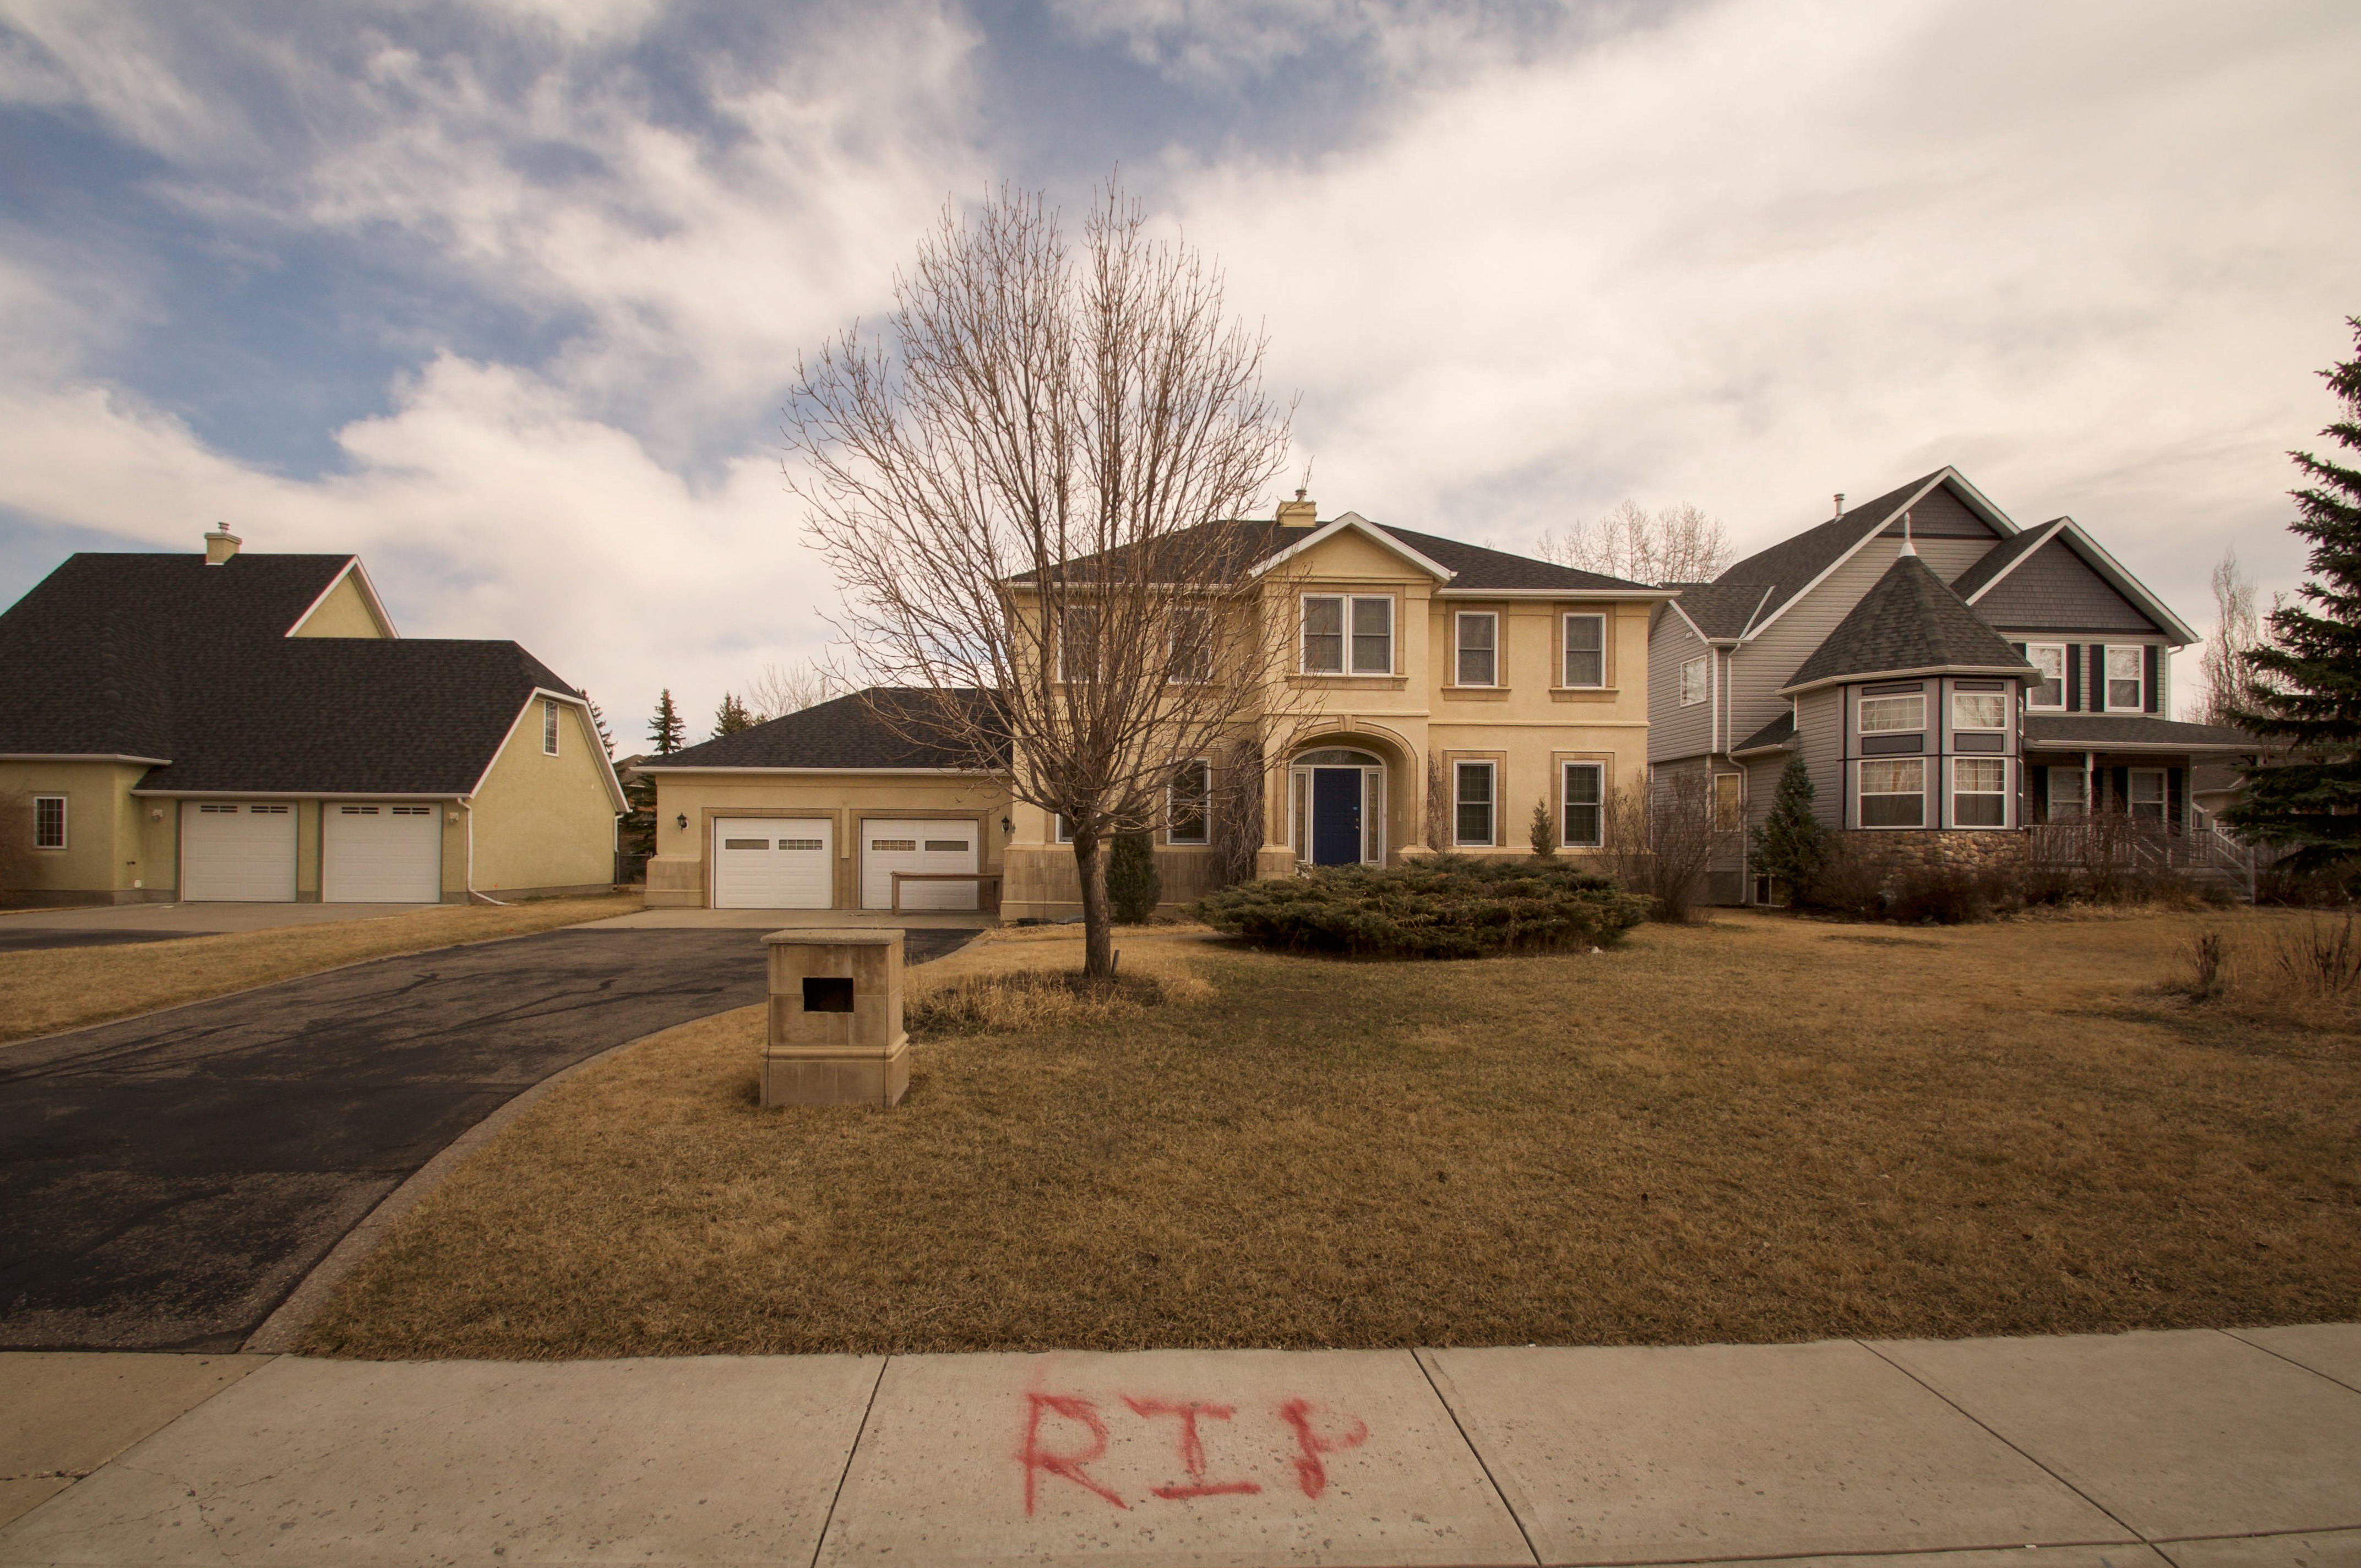 Neighborhood Full Of Million-Dollar Homes Is Now An Eerie Ghost